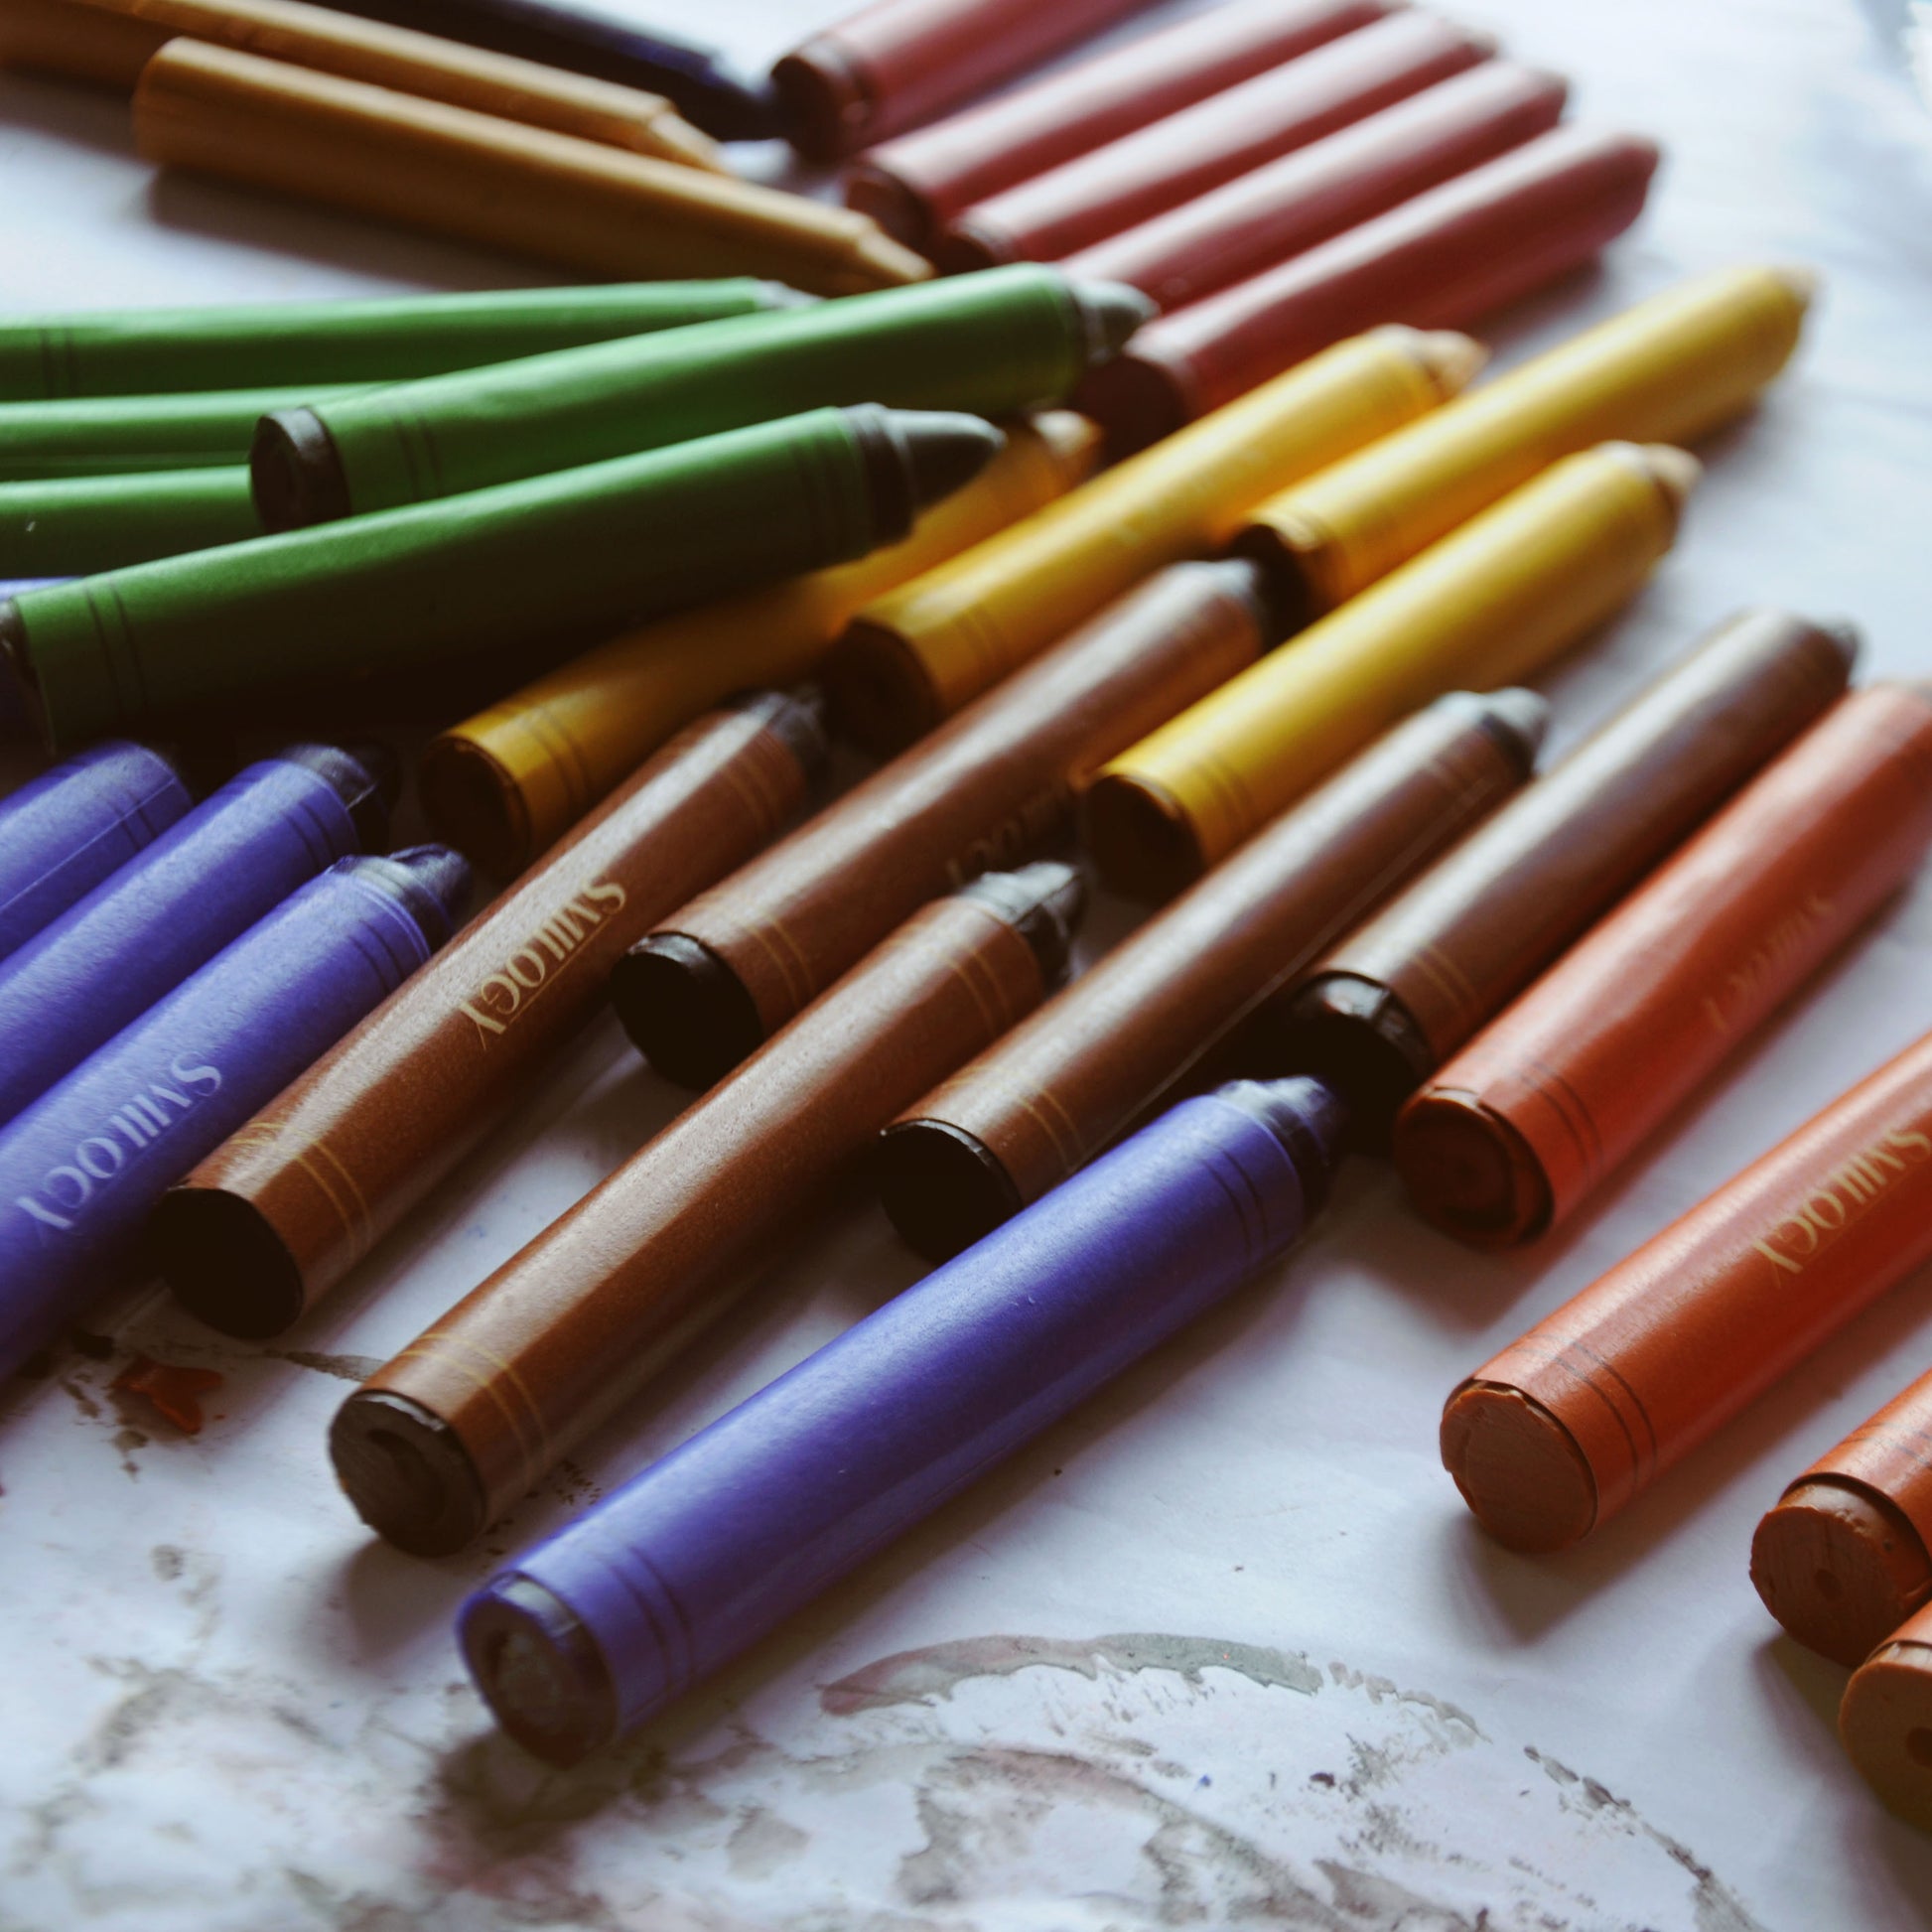 Eco-Kids Natural Beeswax Crayons